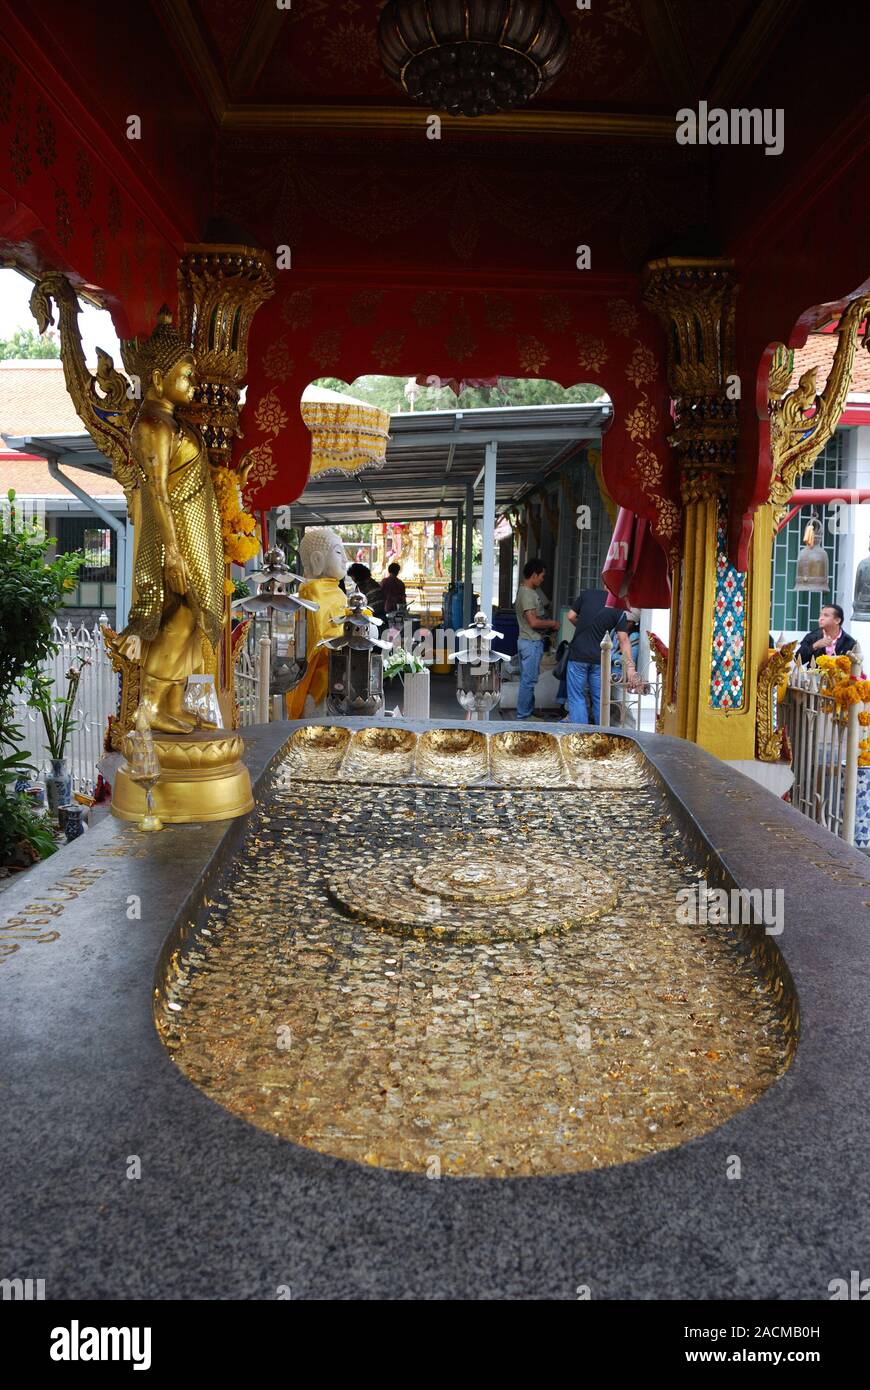 Il Buddha di impronta, dorato con foglia oro, Wat Chai Chanasongkhram, Banglampoo, Bangkok, Thailandia, Asia Foto Stock